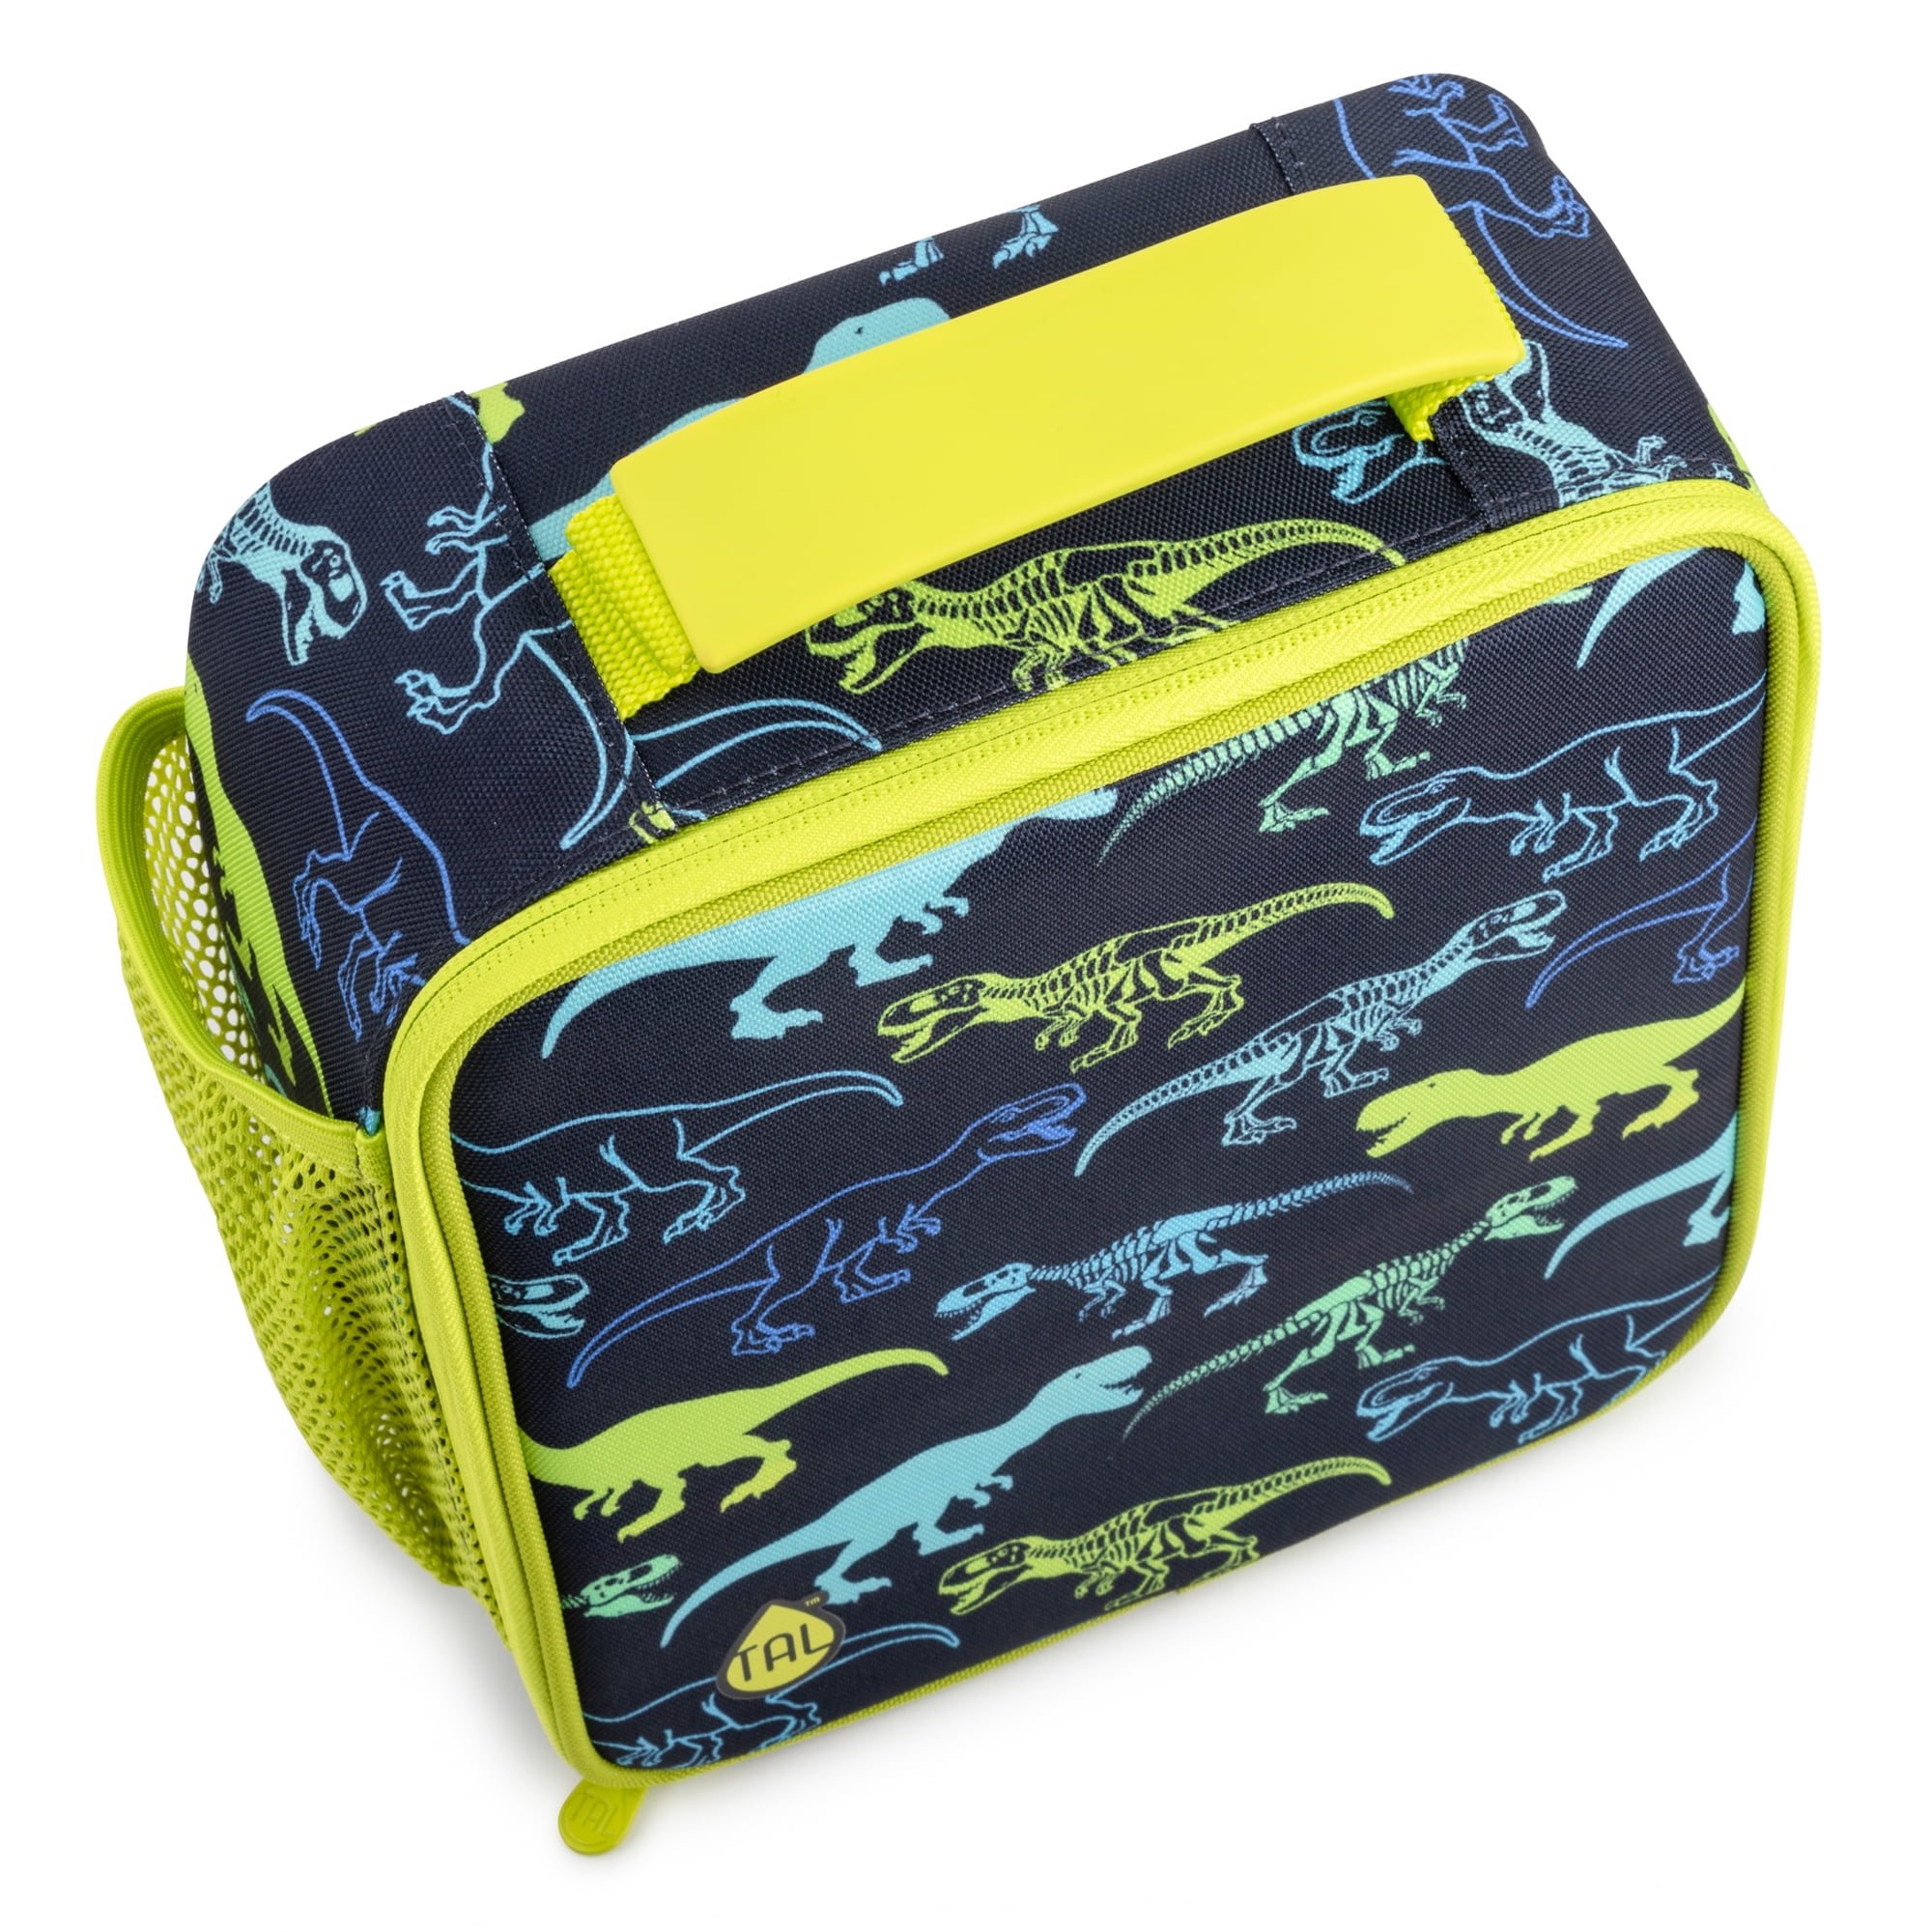 Aloha Hawaii Dinosaur Lunch Bag Reversible Sequin Lightweight